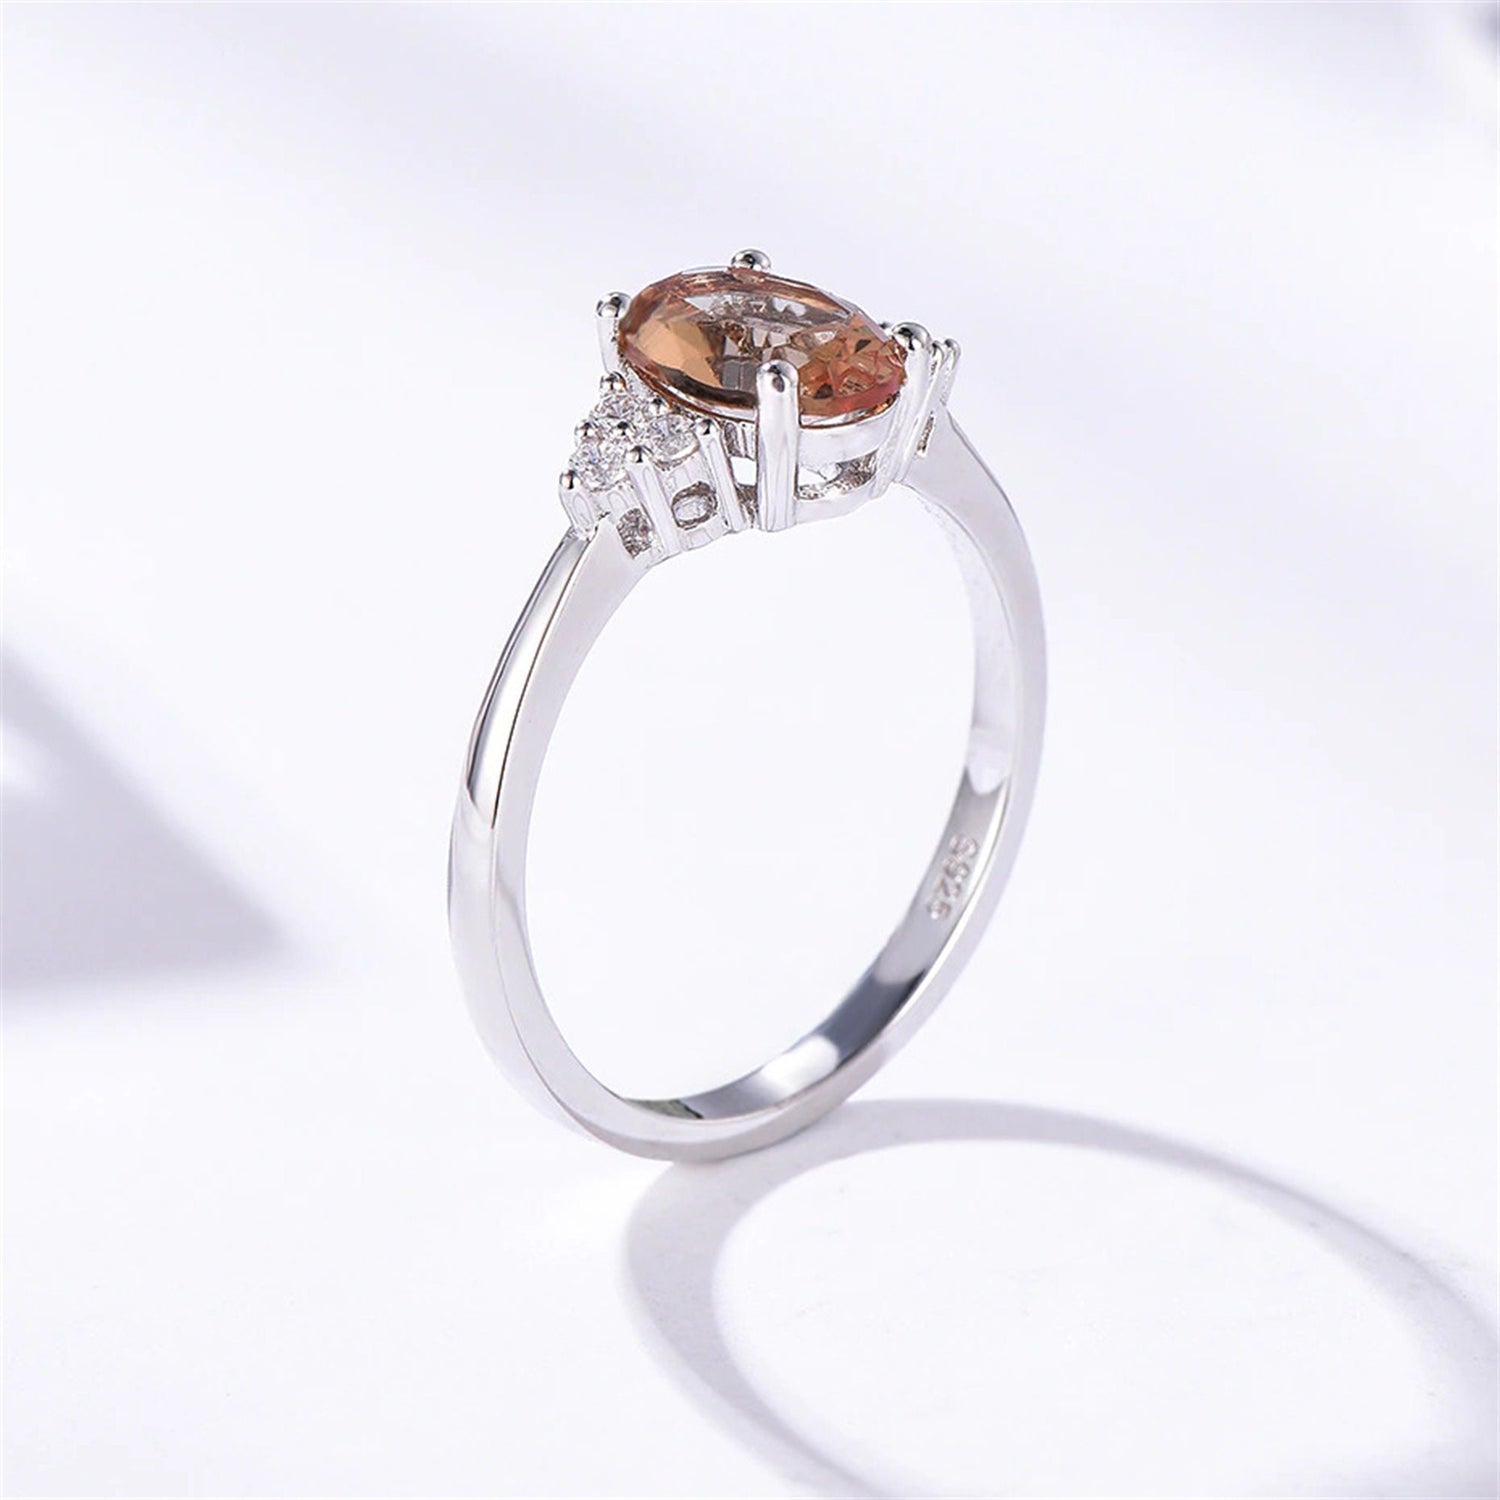 Oval Zultanite Ring, Solid 925 Silver Gemstone Ring